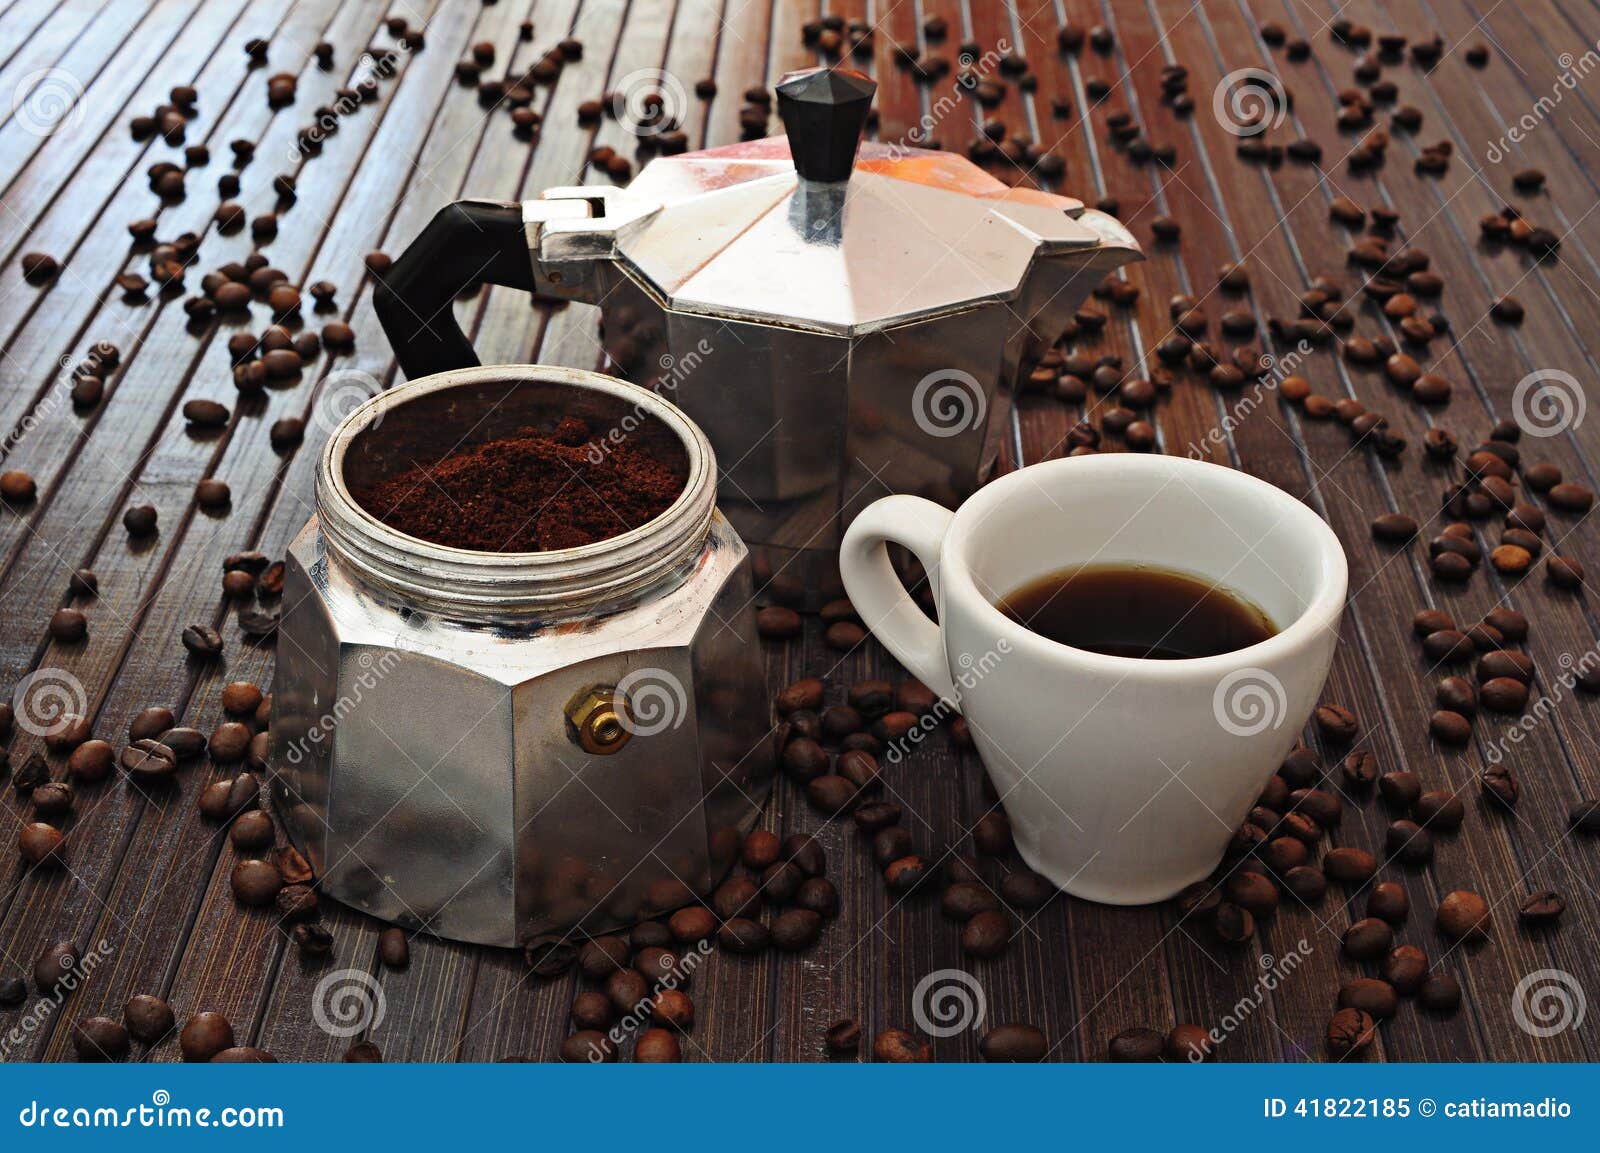 cup of coffee and moka